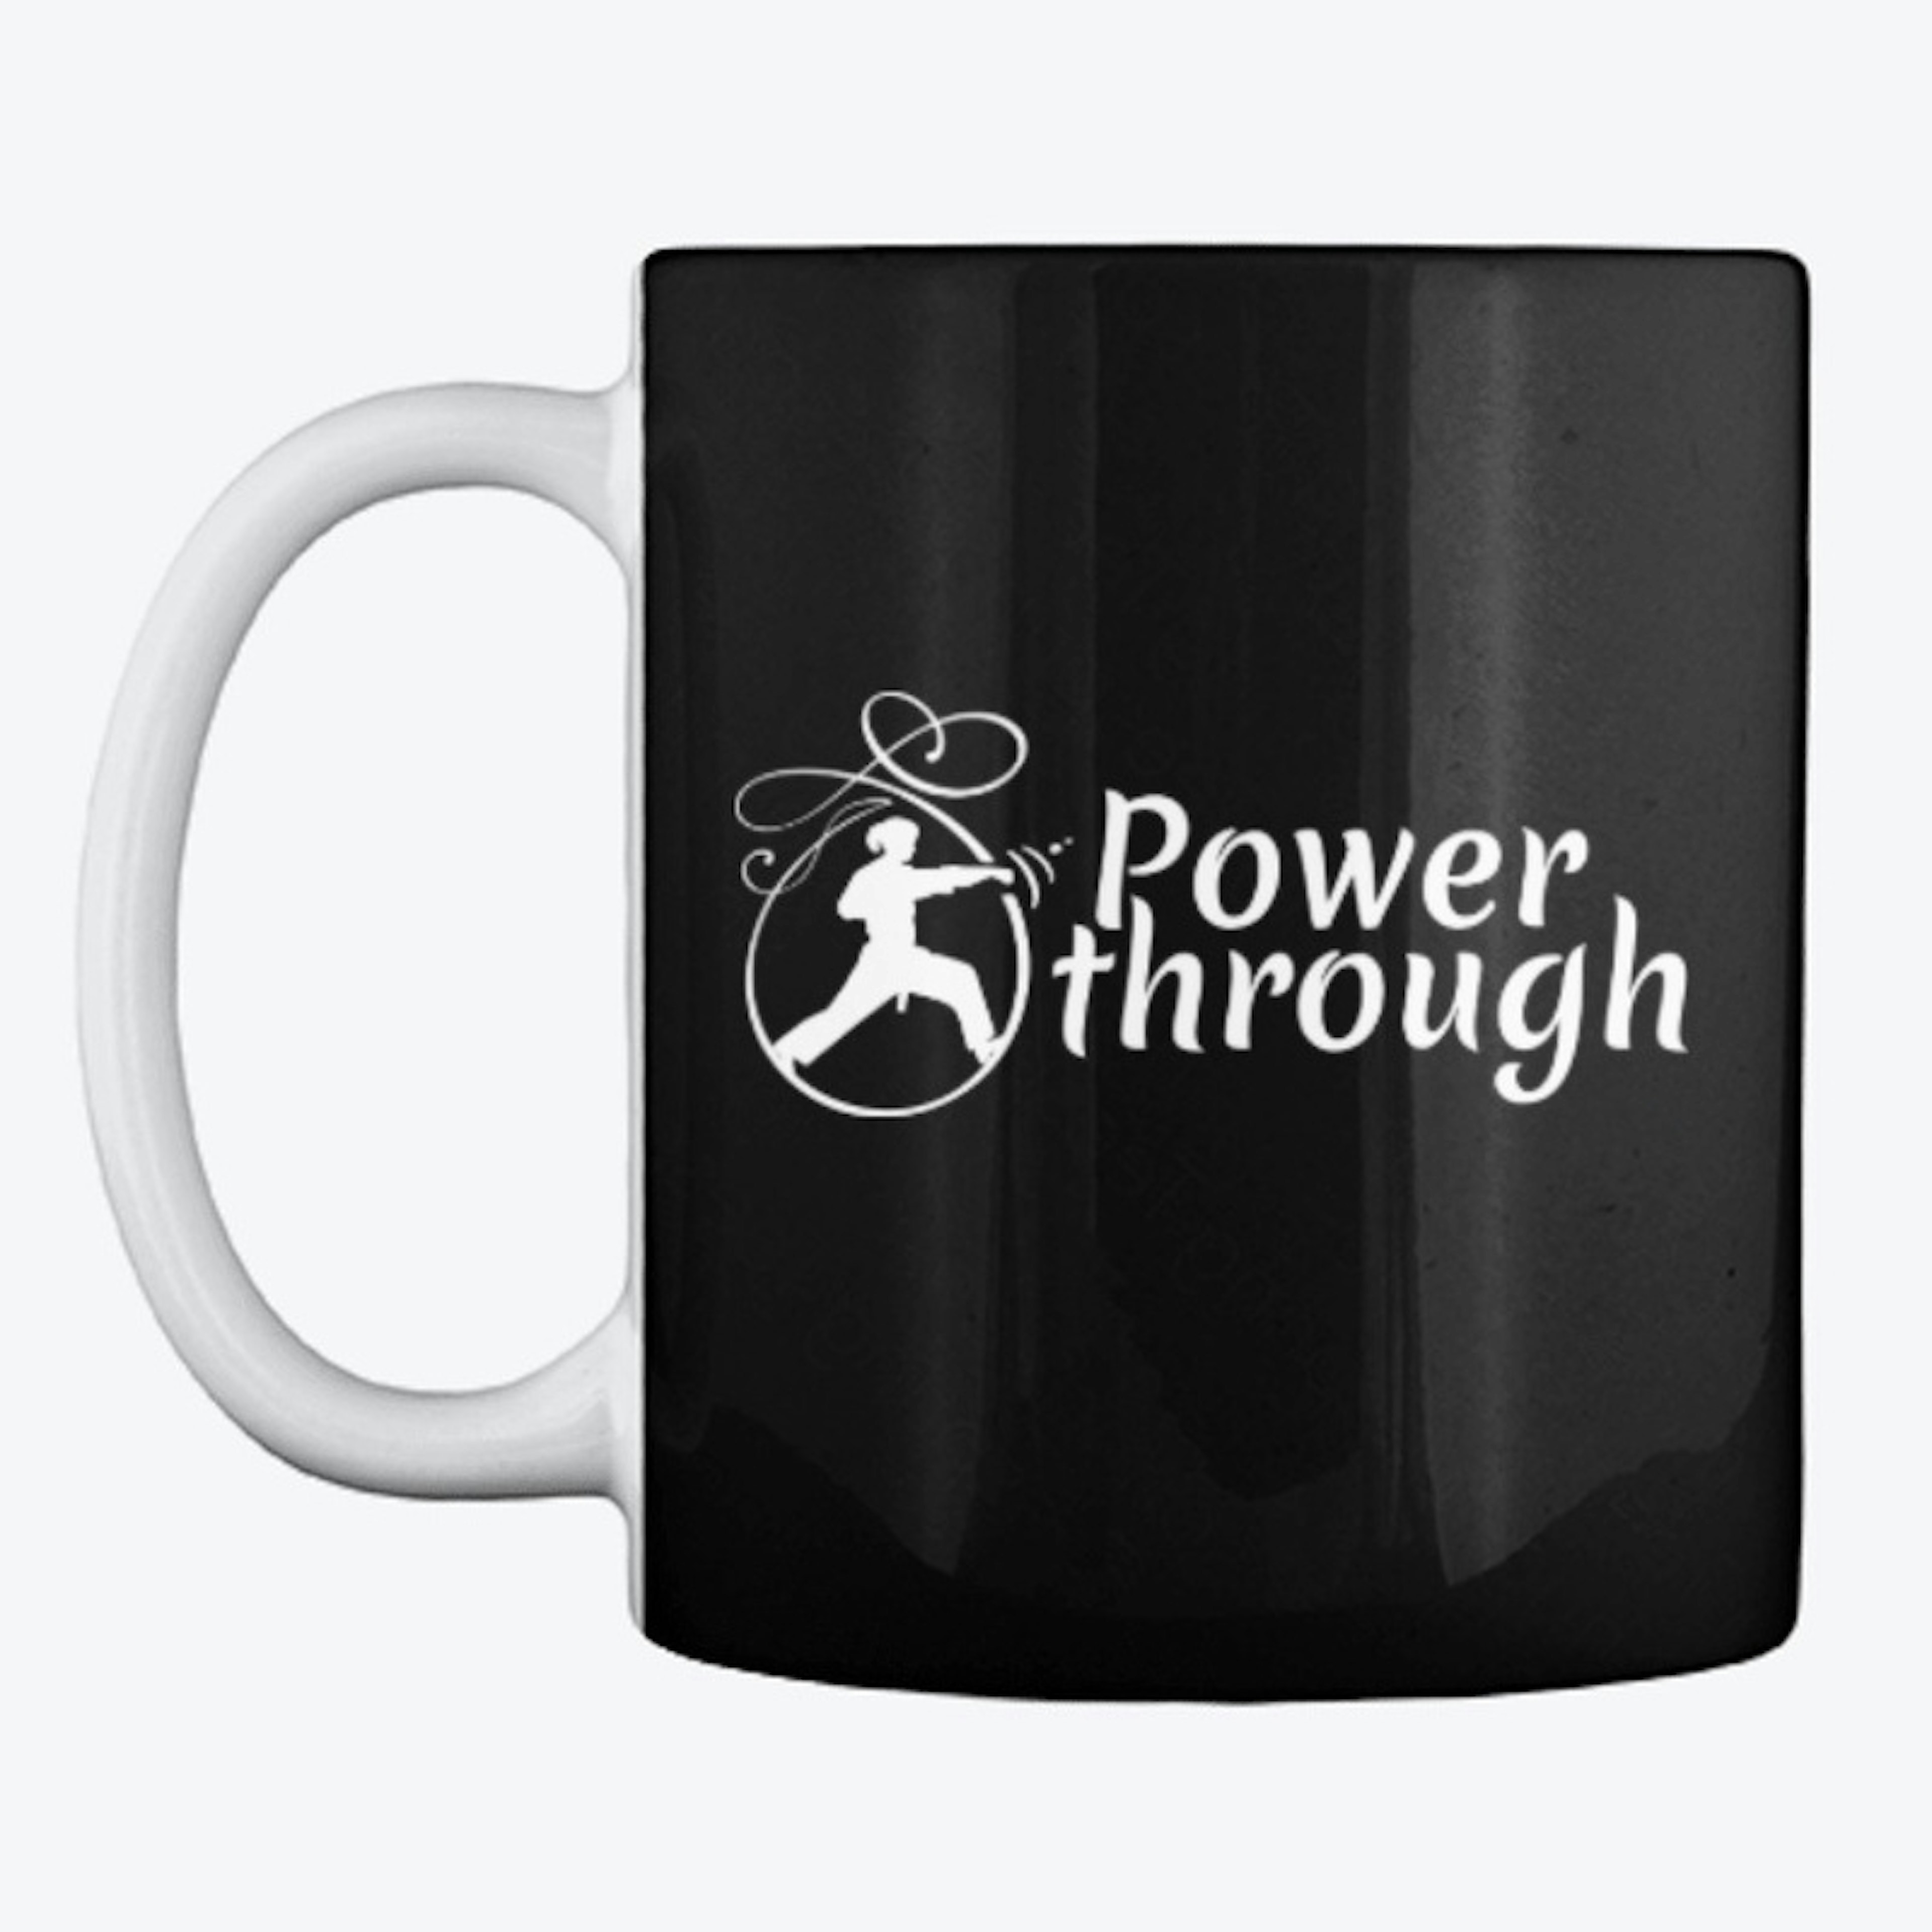 "Power Through" Mug